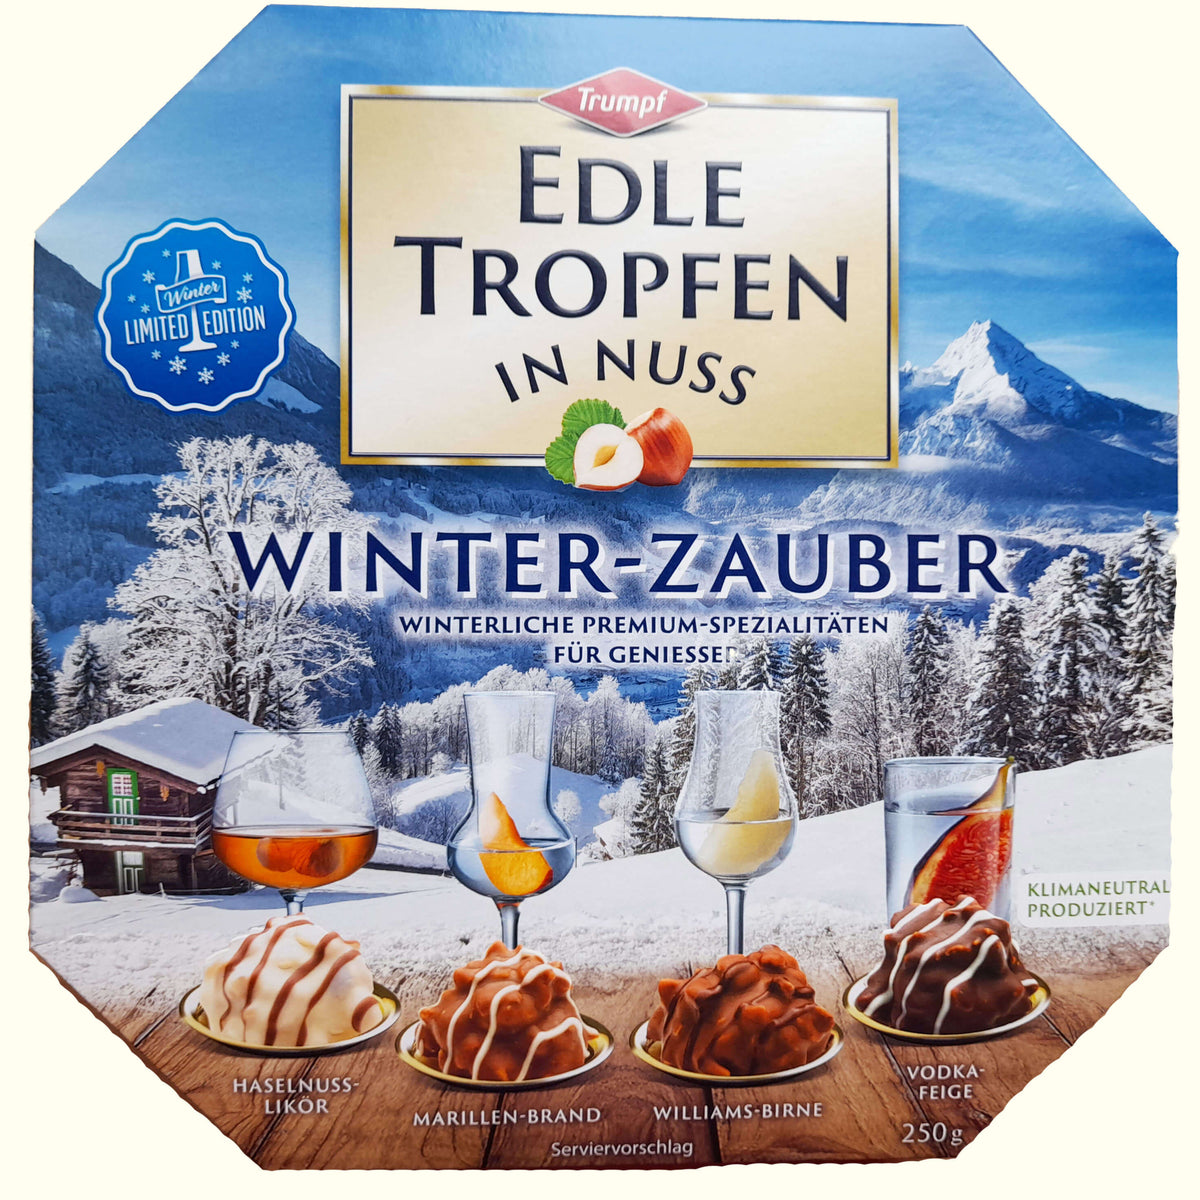 Trumpf Edle Tropfen in Nuss Winter- Zauber Limited Edition 250g